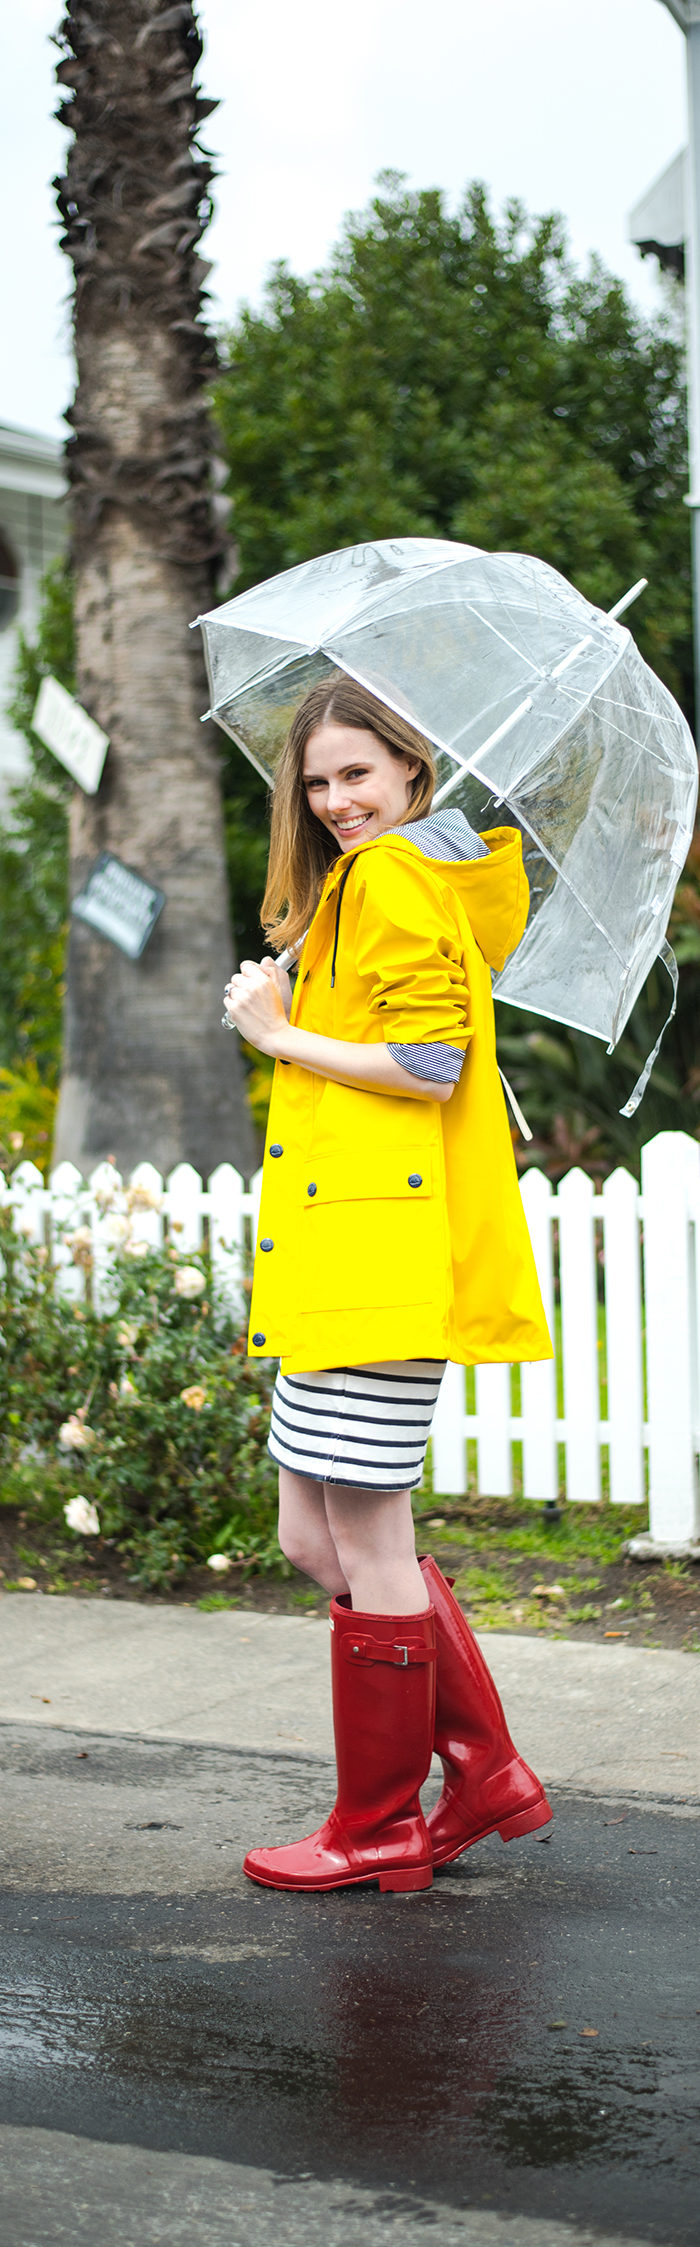 Miss USA 2011 Alyssa Campanella of The A List blog wearing Petit Bateau Rain Coat and Hunter red rain boots